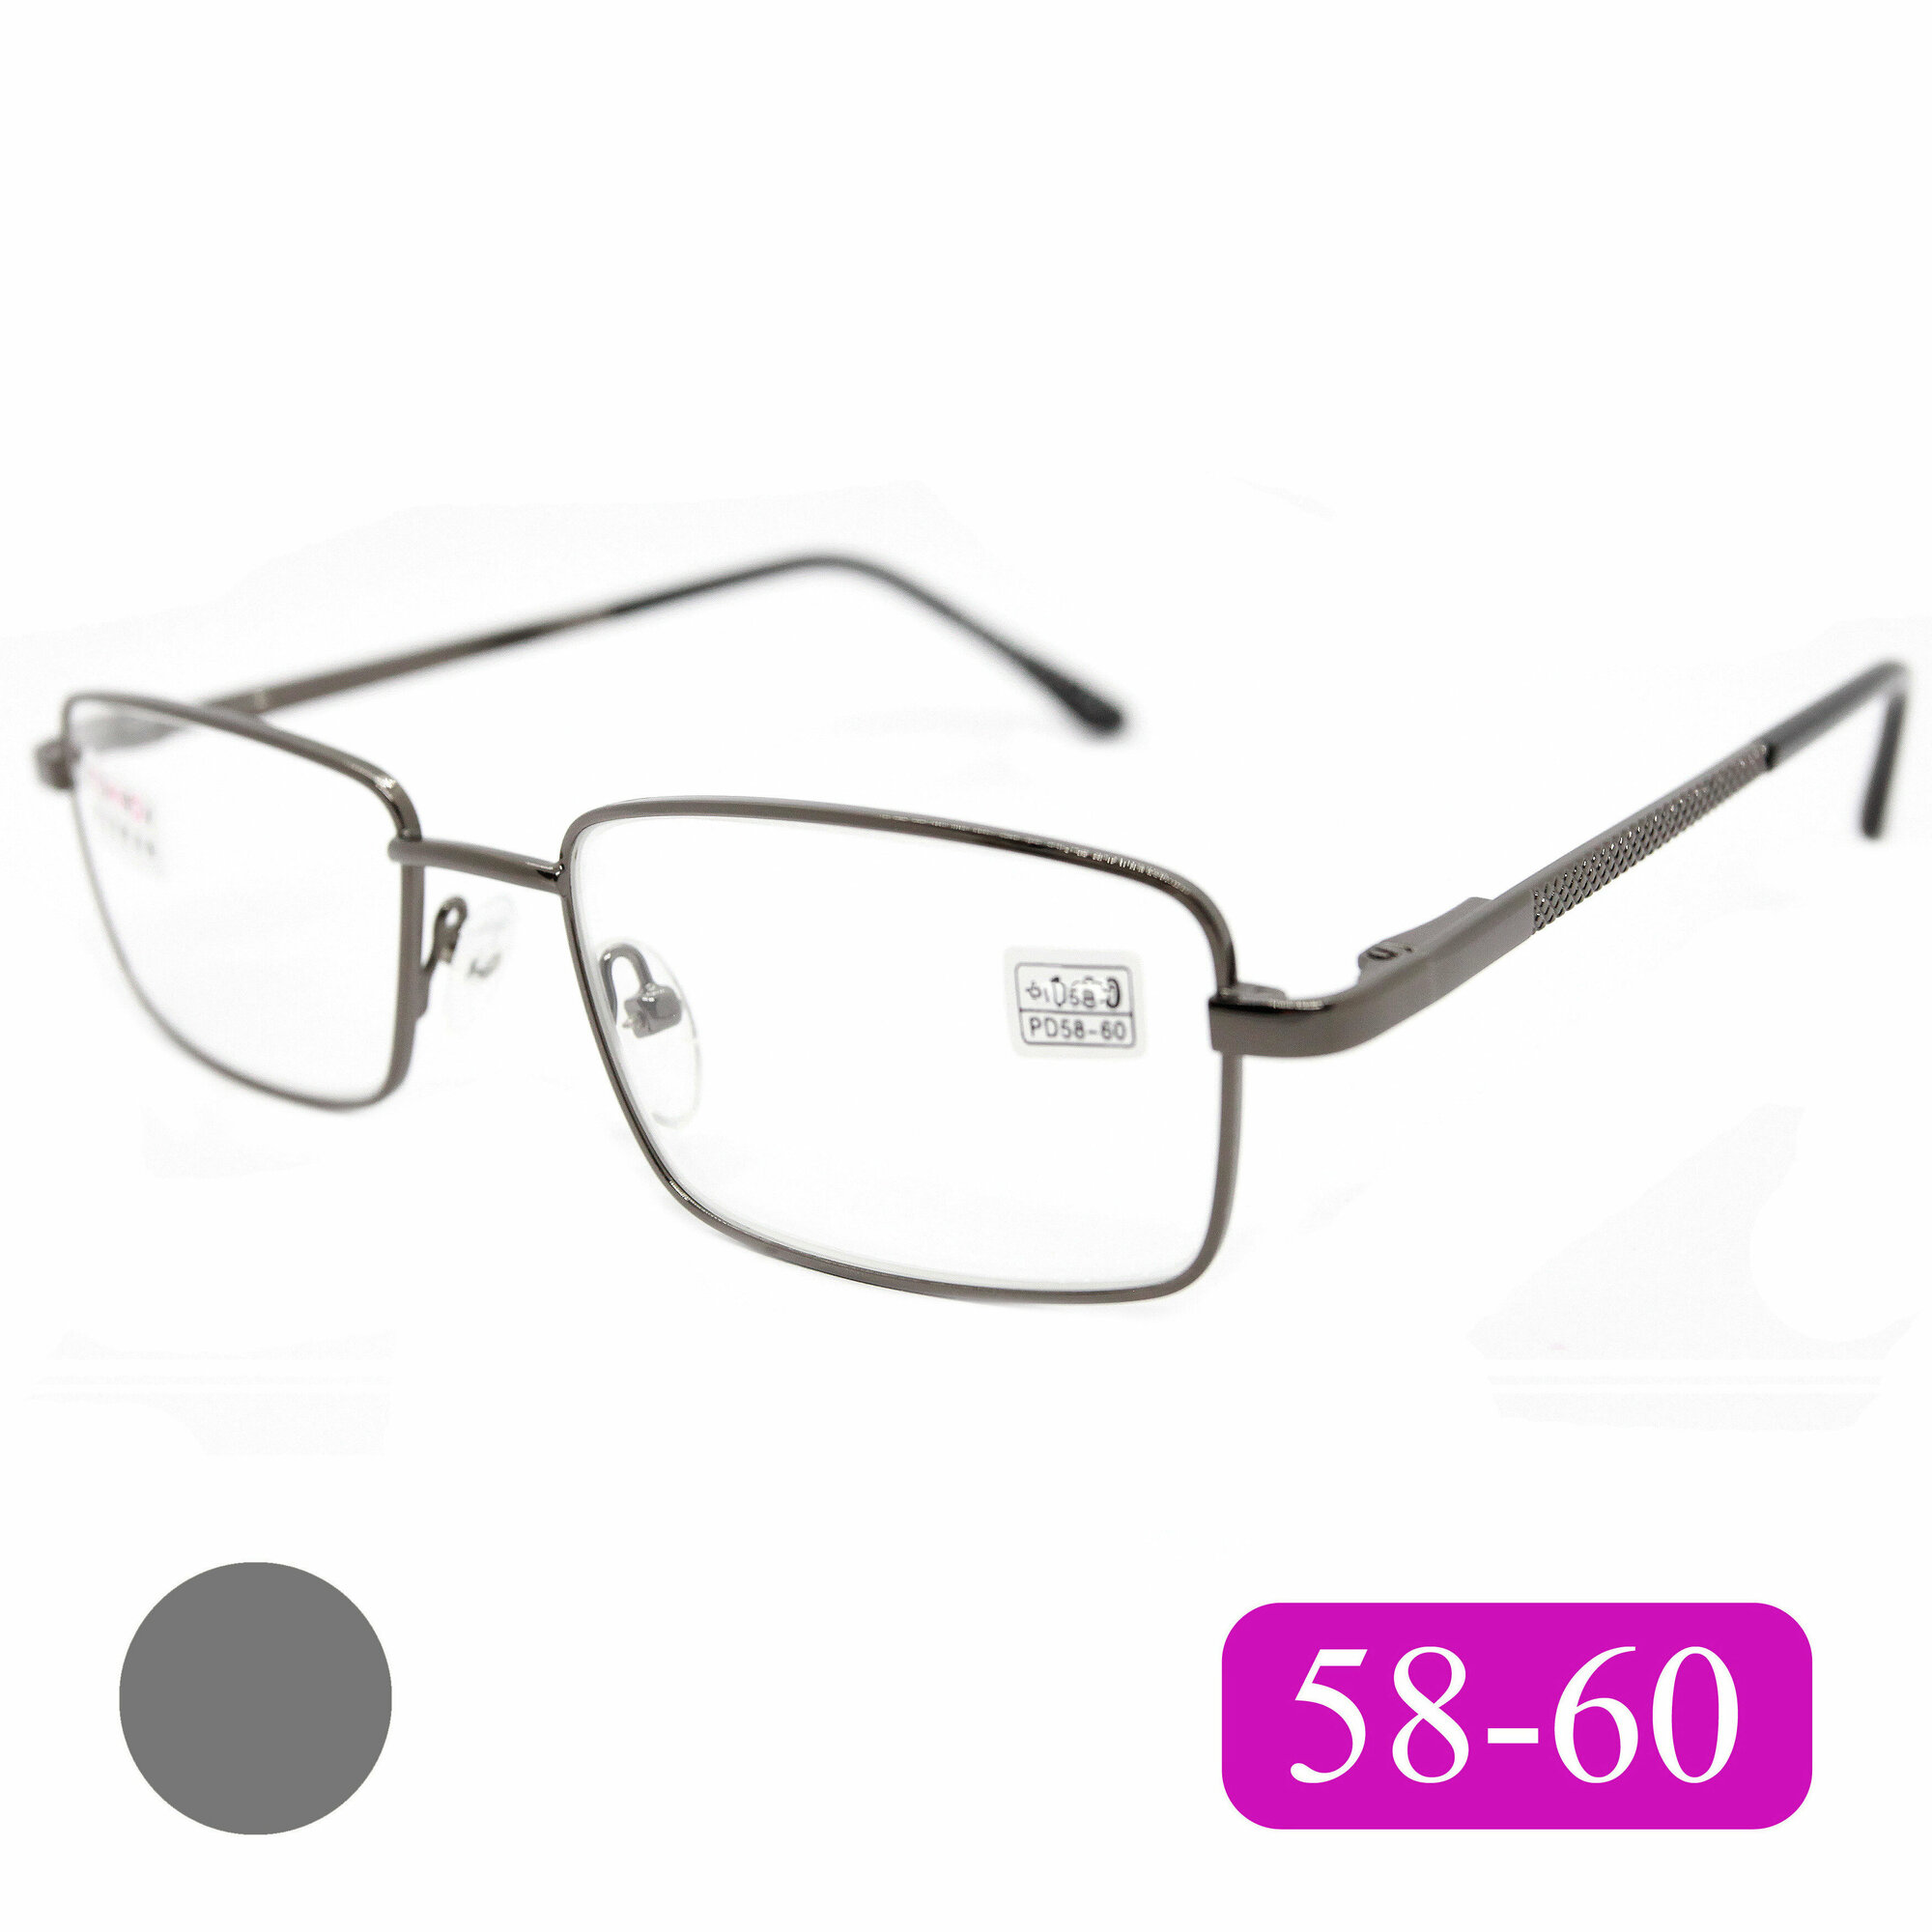 Очки для зрения-чтения стекло PD 58-60 (+4.00) Fedrov 569 C2, цвет серый, линза стекло, без футляра, РЦ 58-60